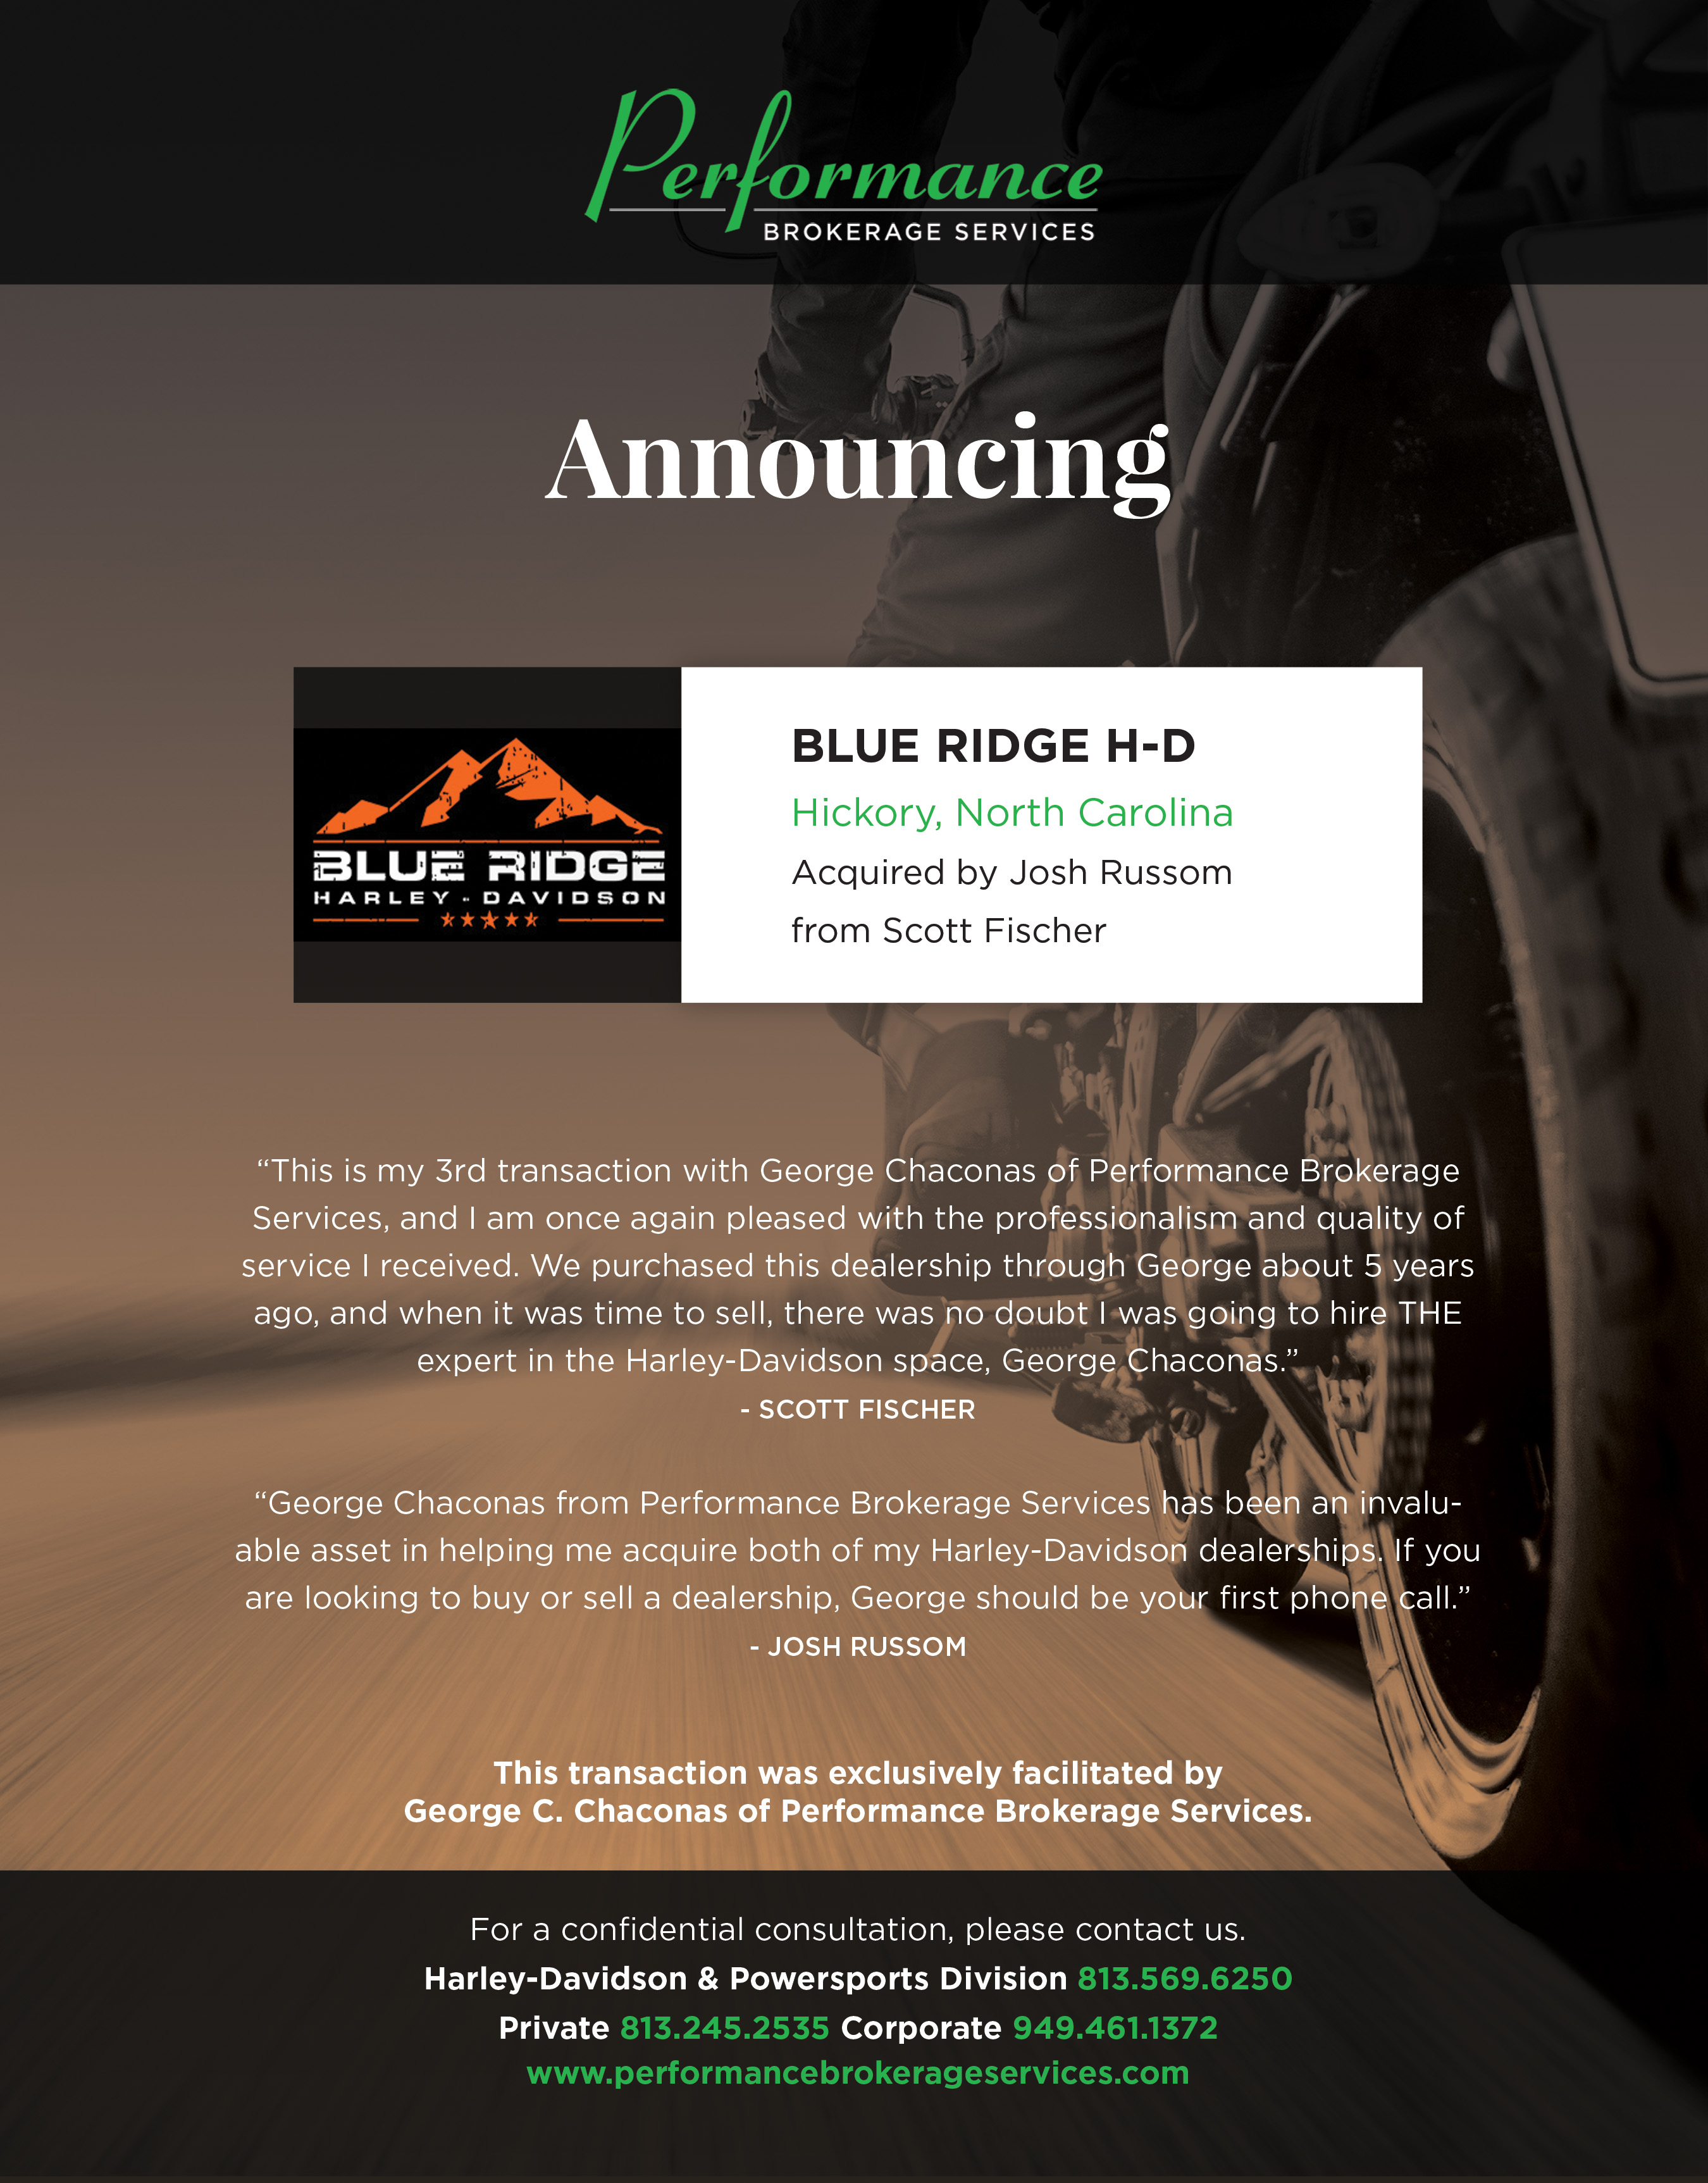 Blue Ridge Harley Davidson In Hickory North Carolina Sells To Josh Russom Performance Brokerage Services